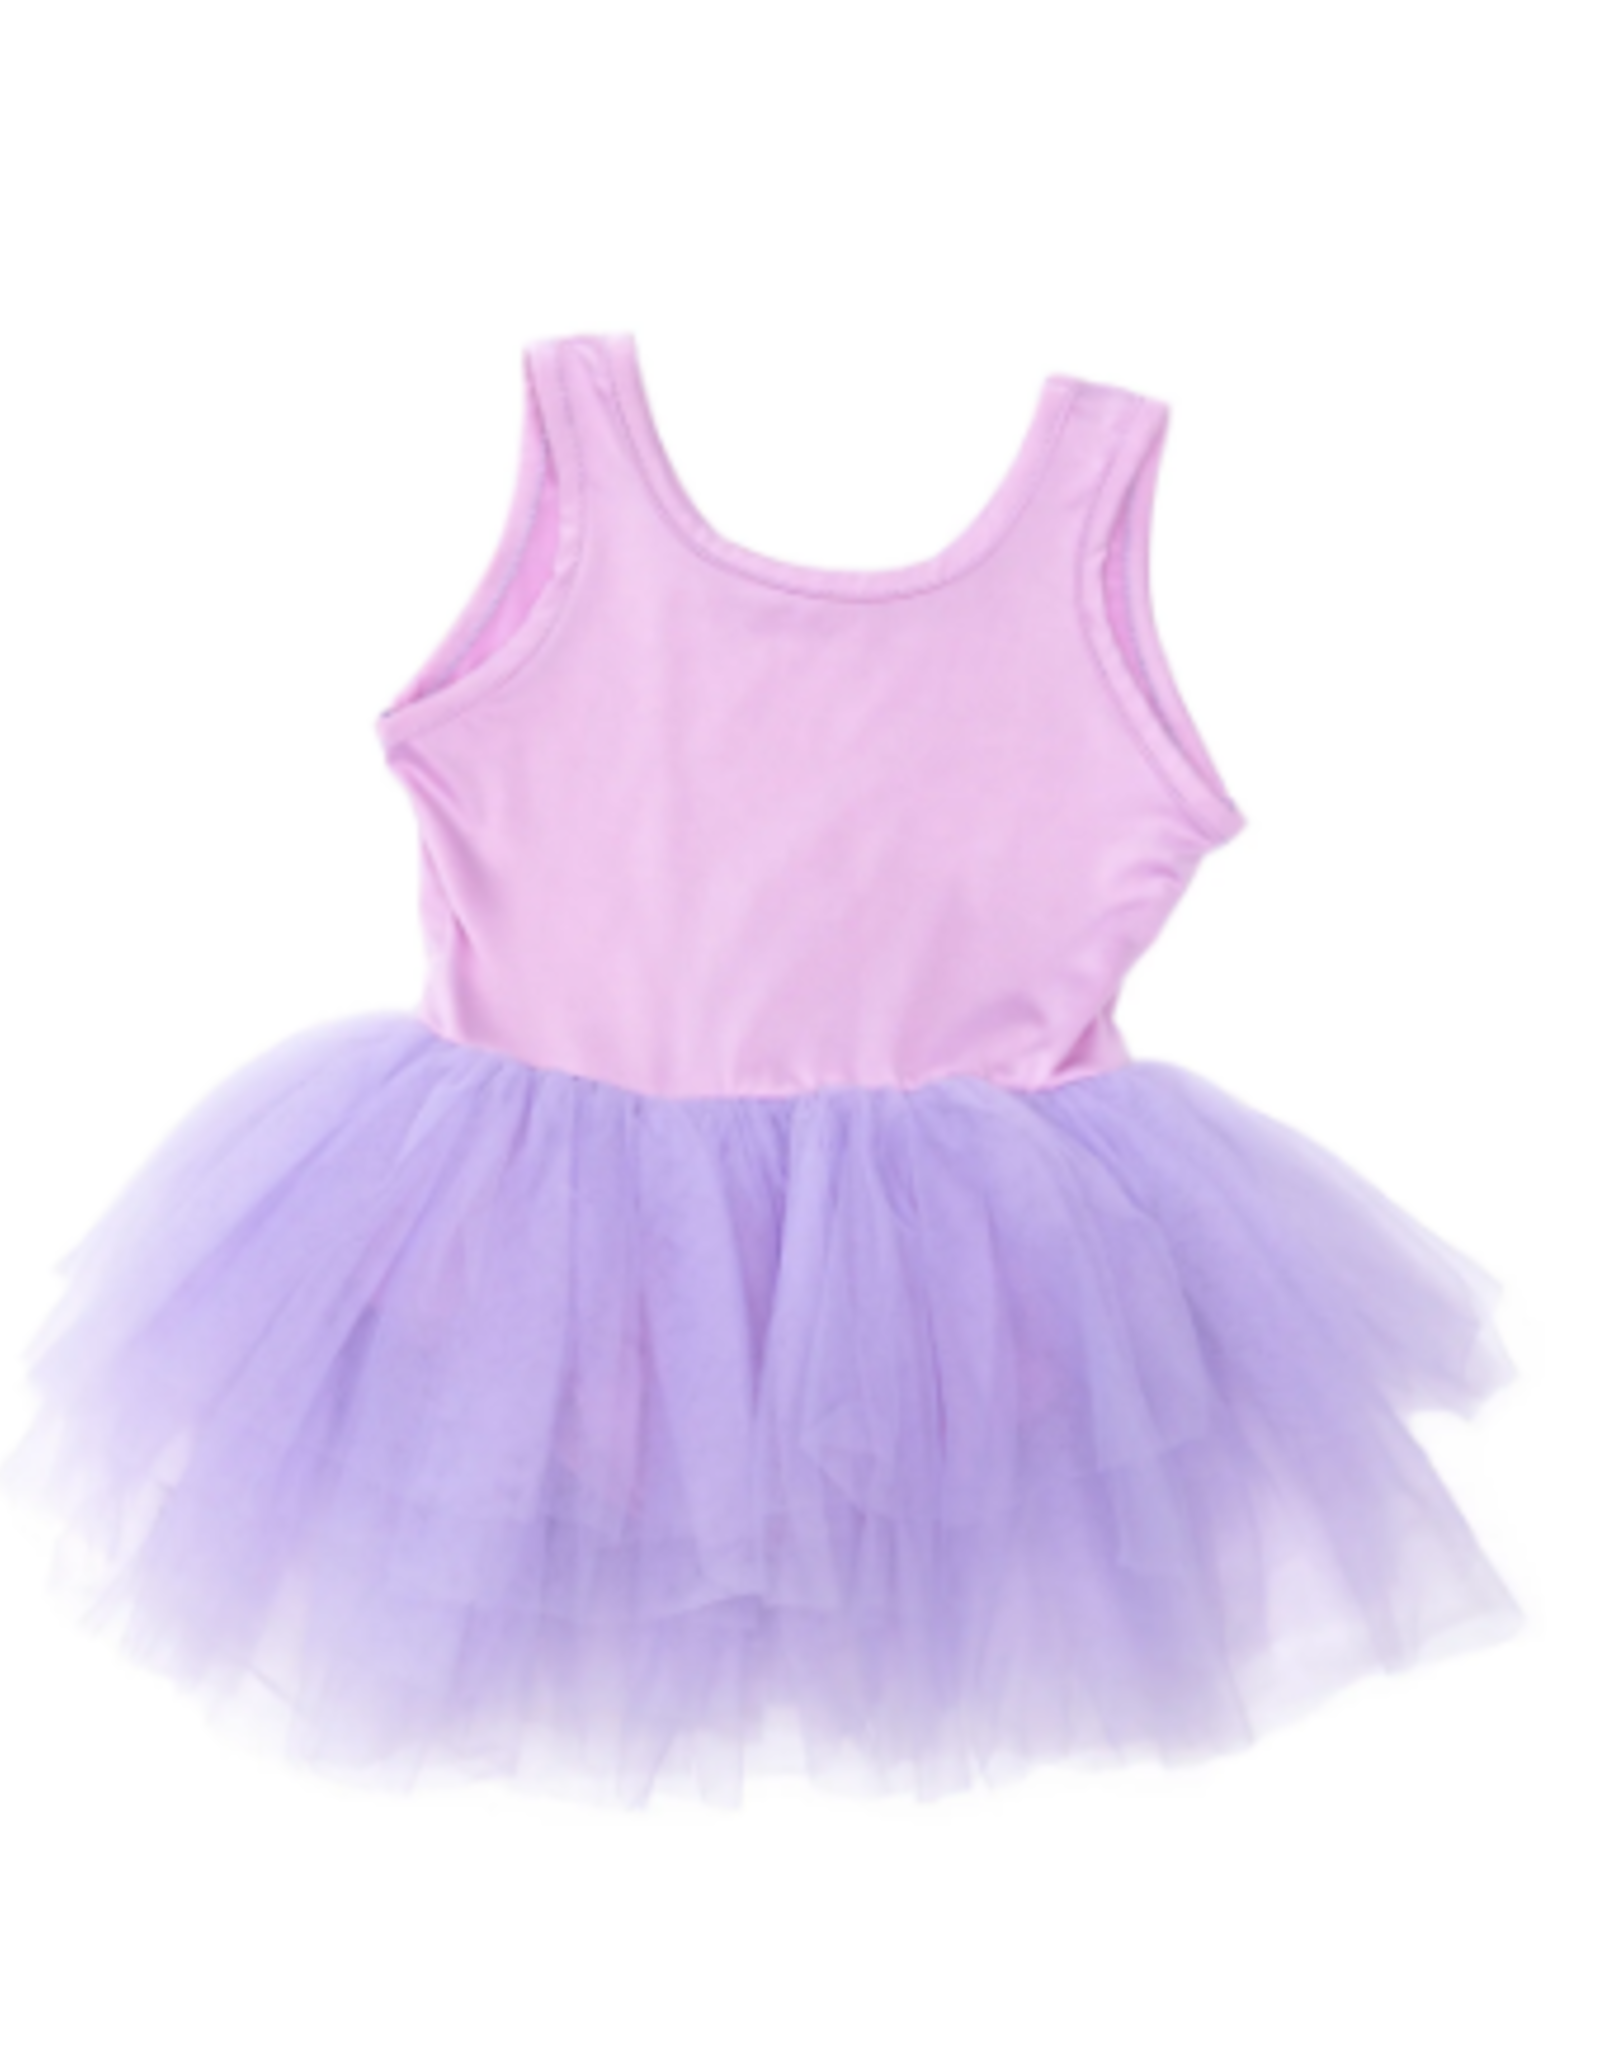 Great Pretenders Ballet Tutu Dress, Lilac size 5-6